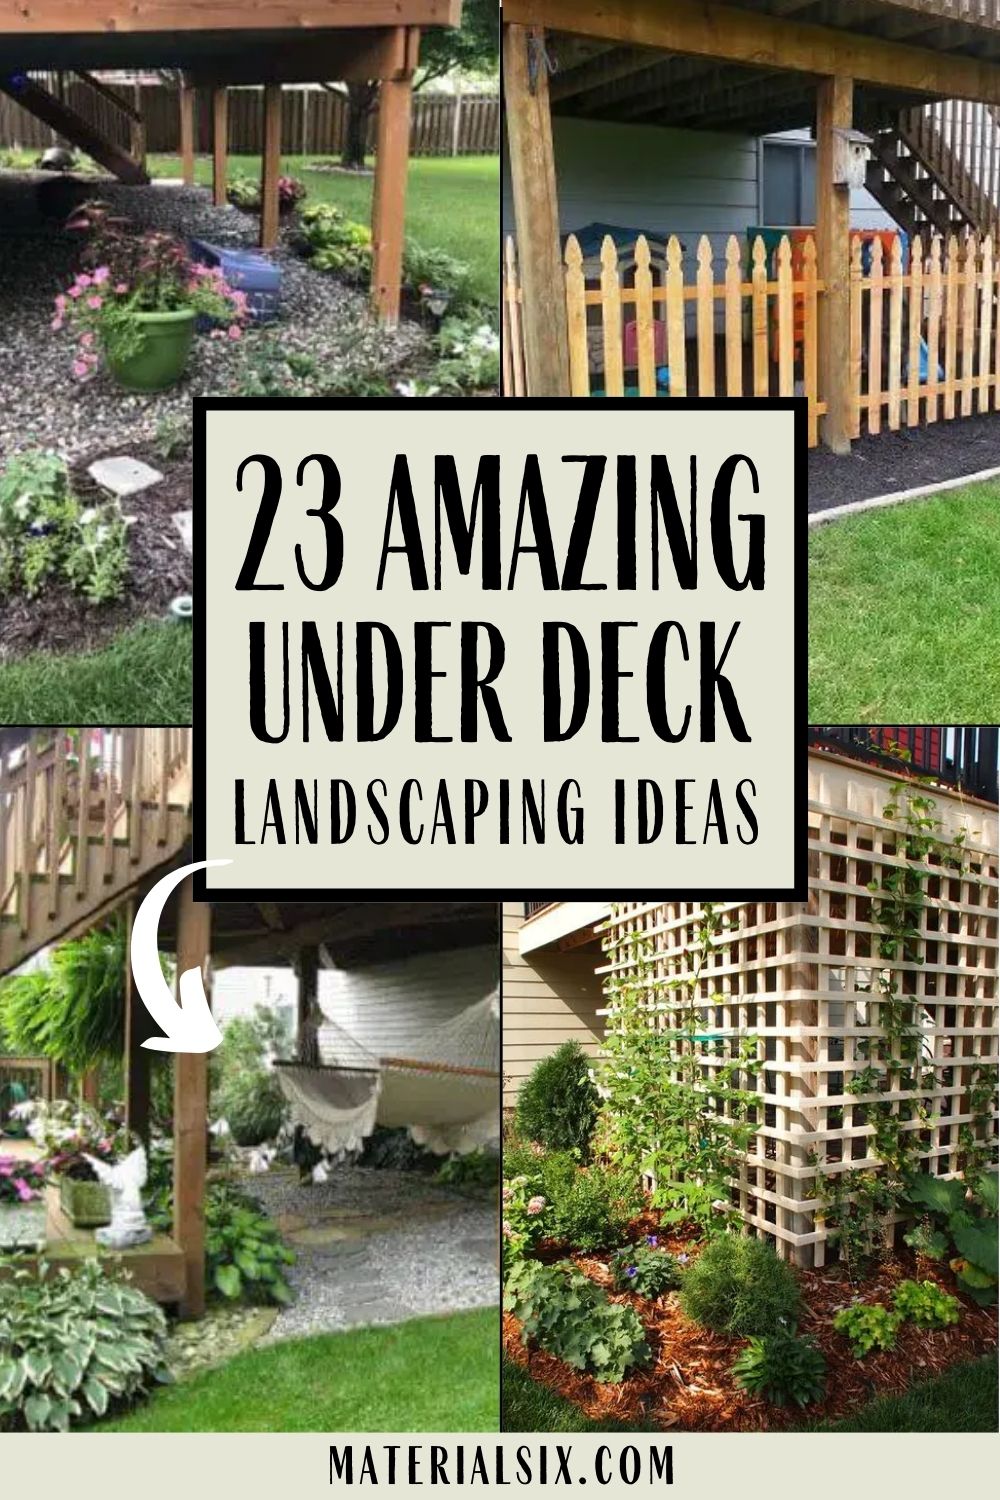 23 Amazing Under Deck Landscaping Ideas